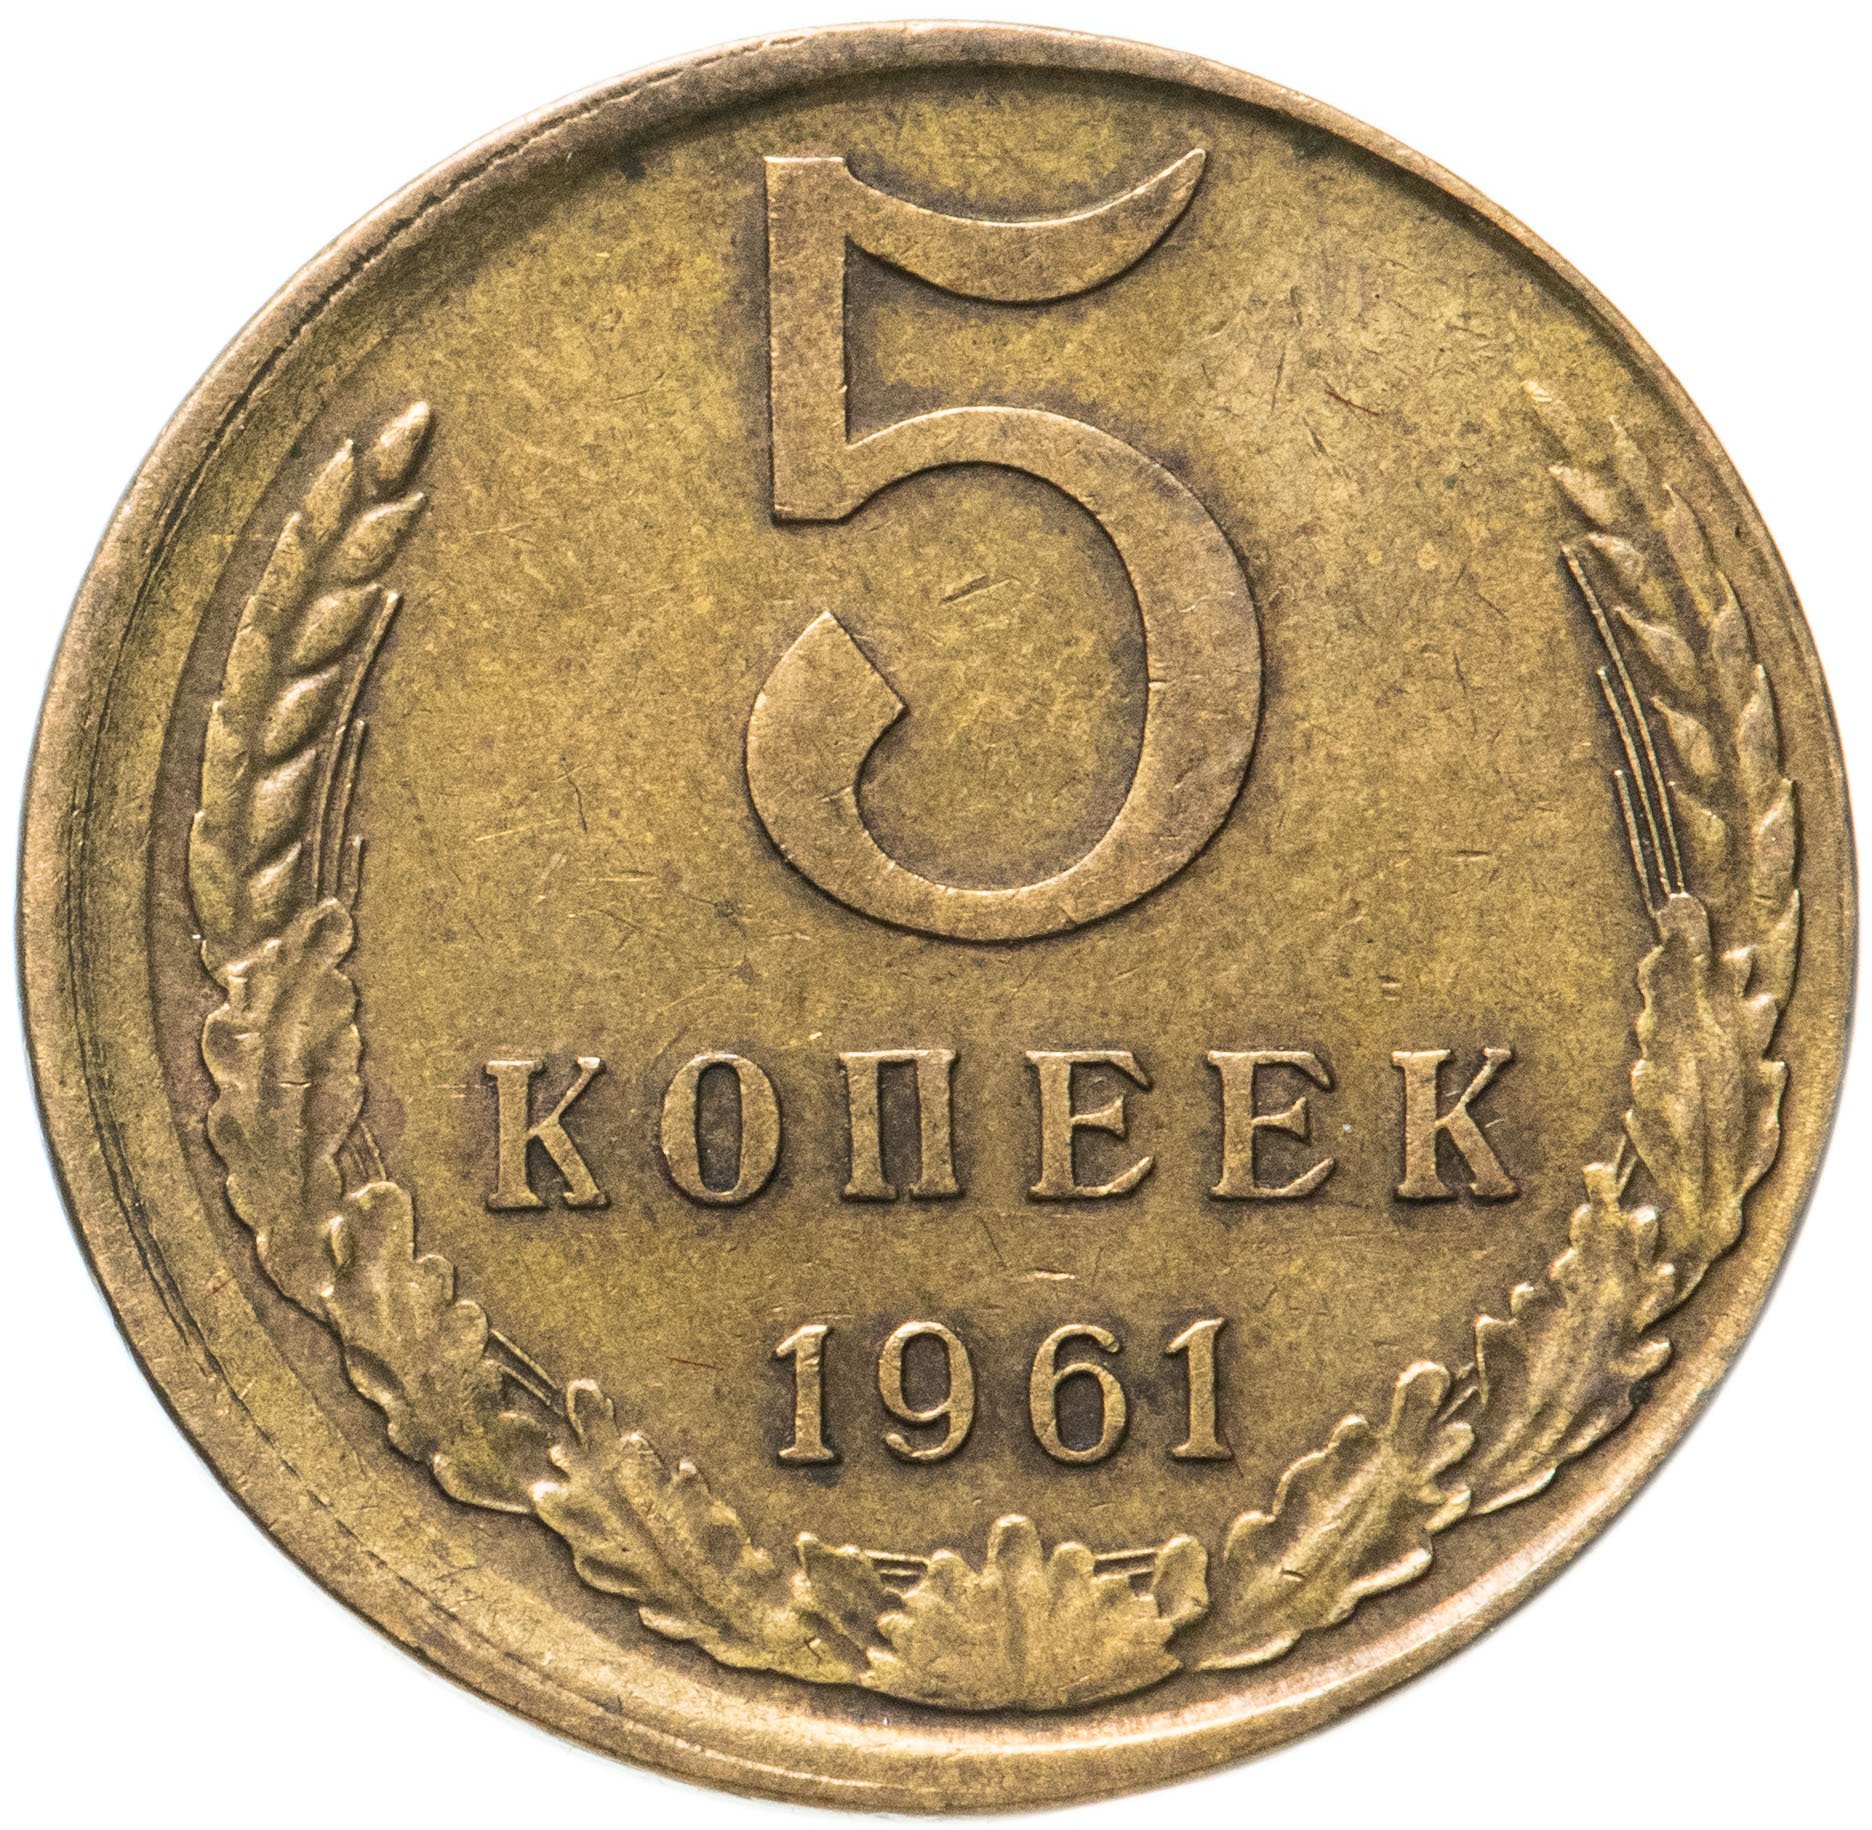 5 копеек 45. Советские монеты. Монета 2 копейки. Монеты СССР до 1961 года. Копейка монета.